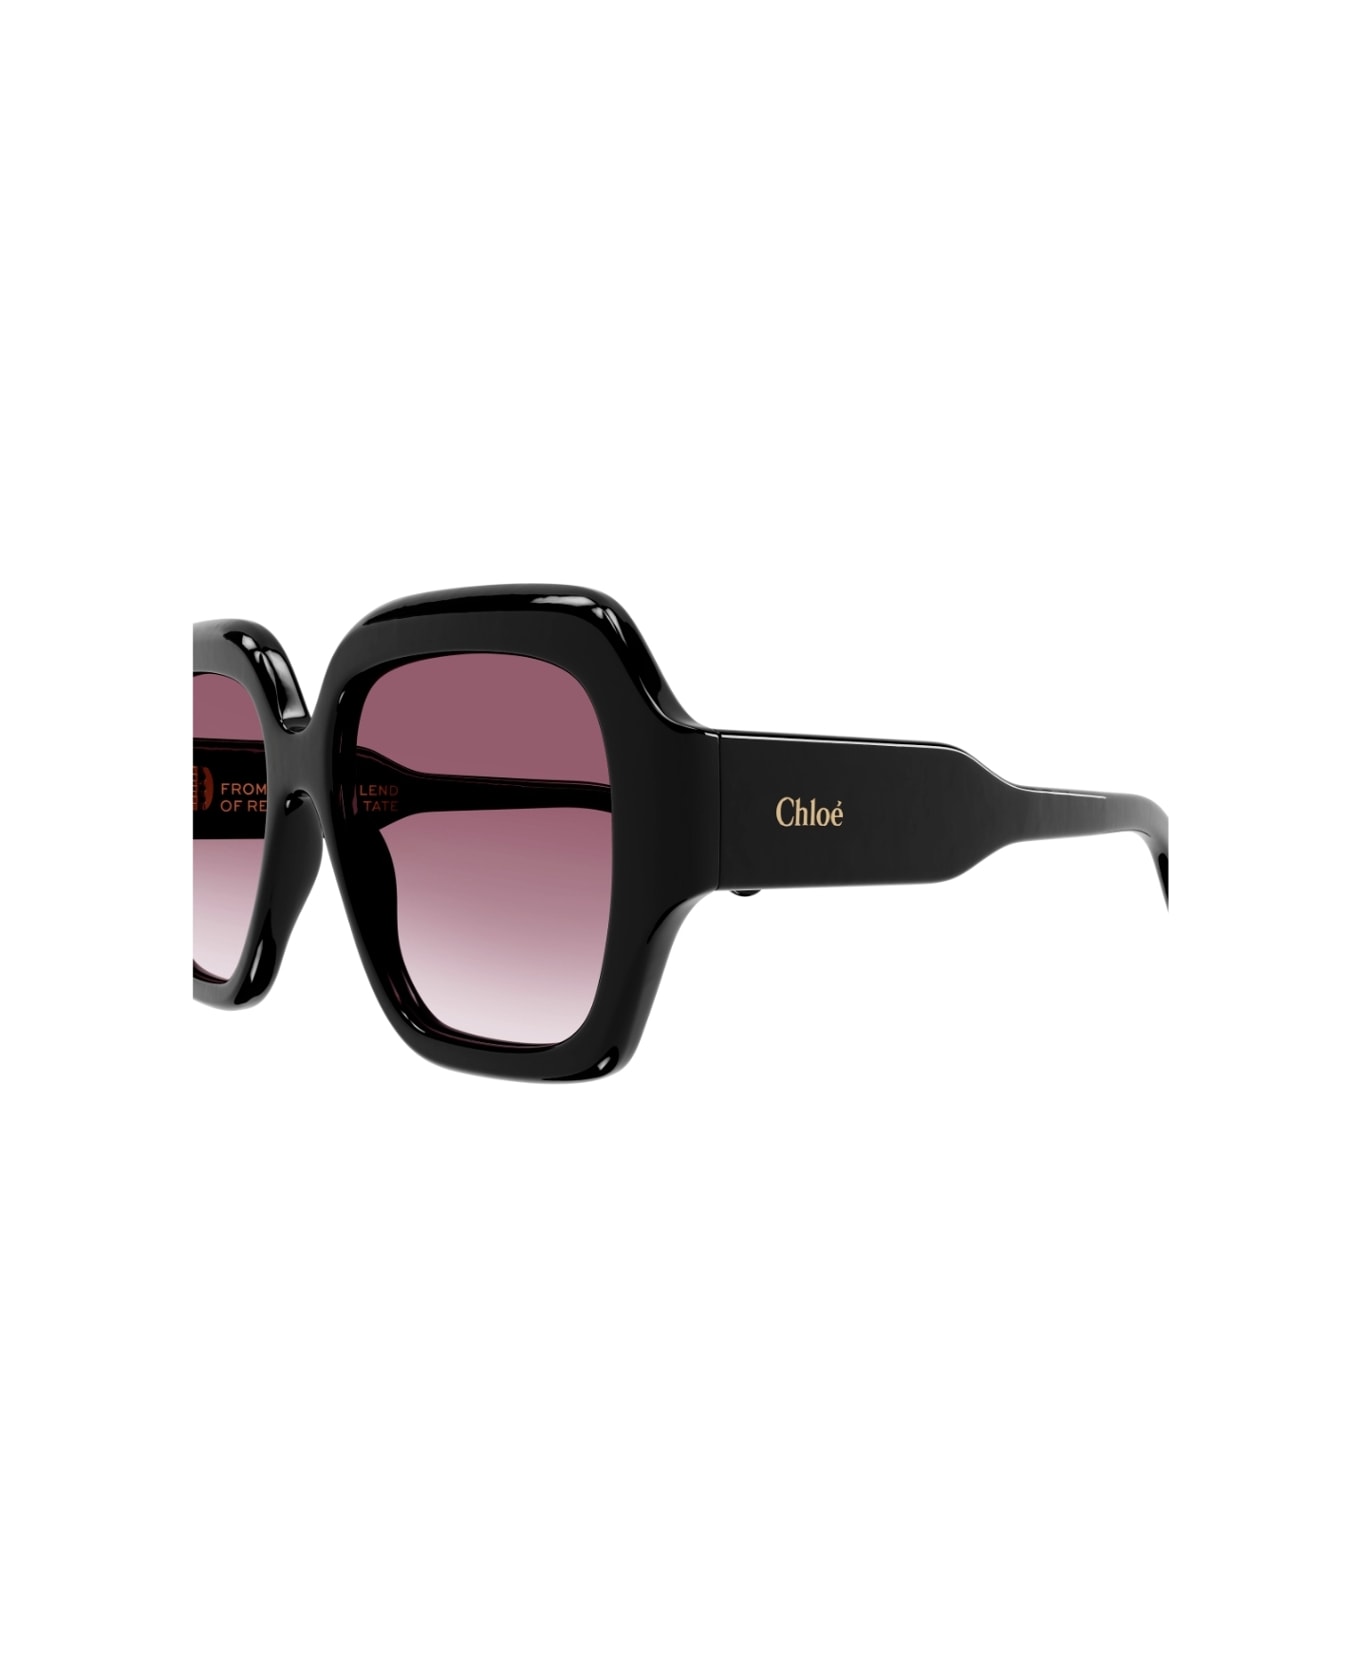 Chloé Eyewear CH0154s 001 Sunglasses サングラス